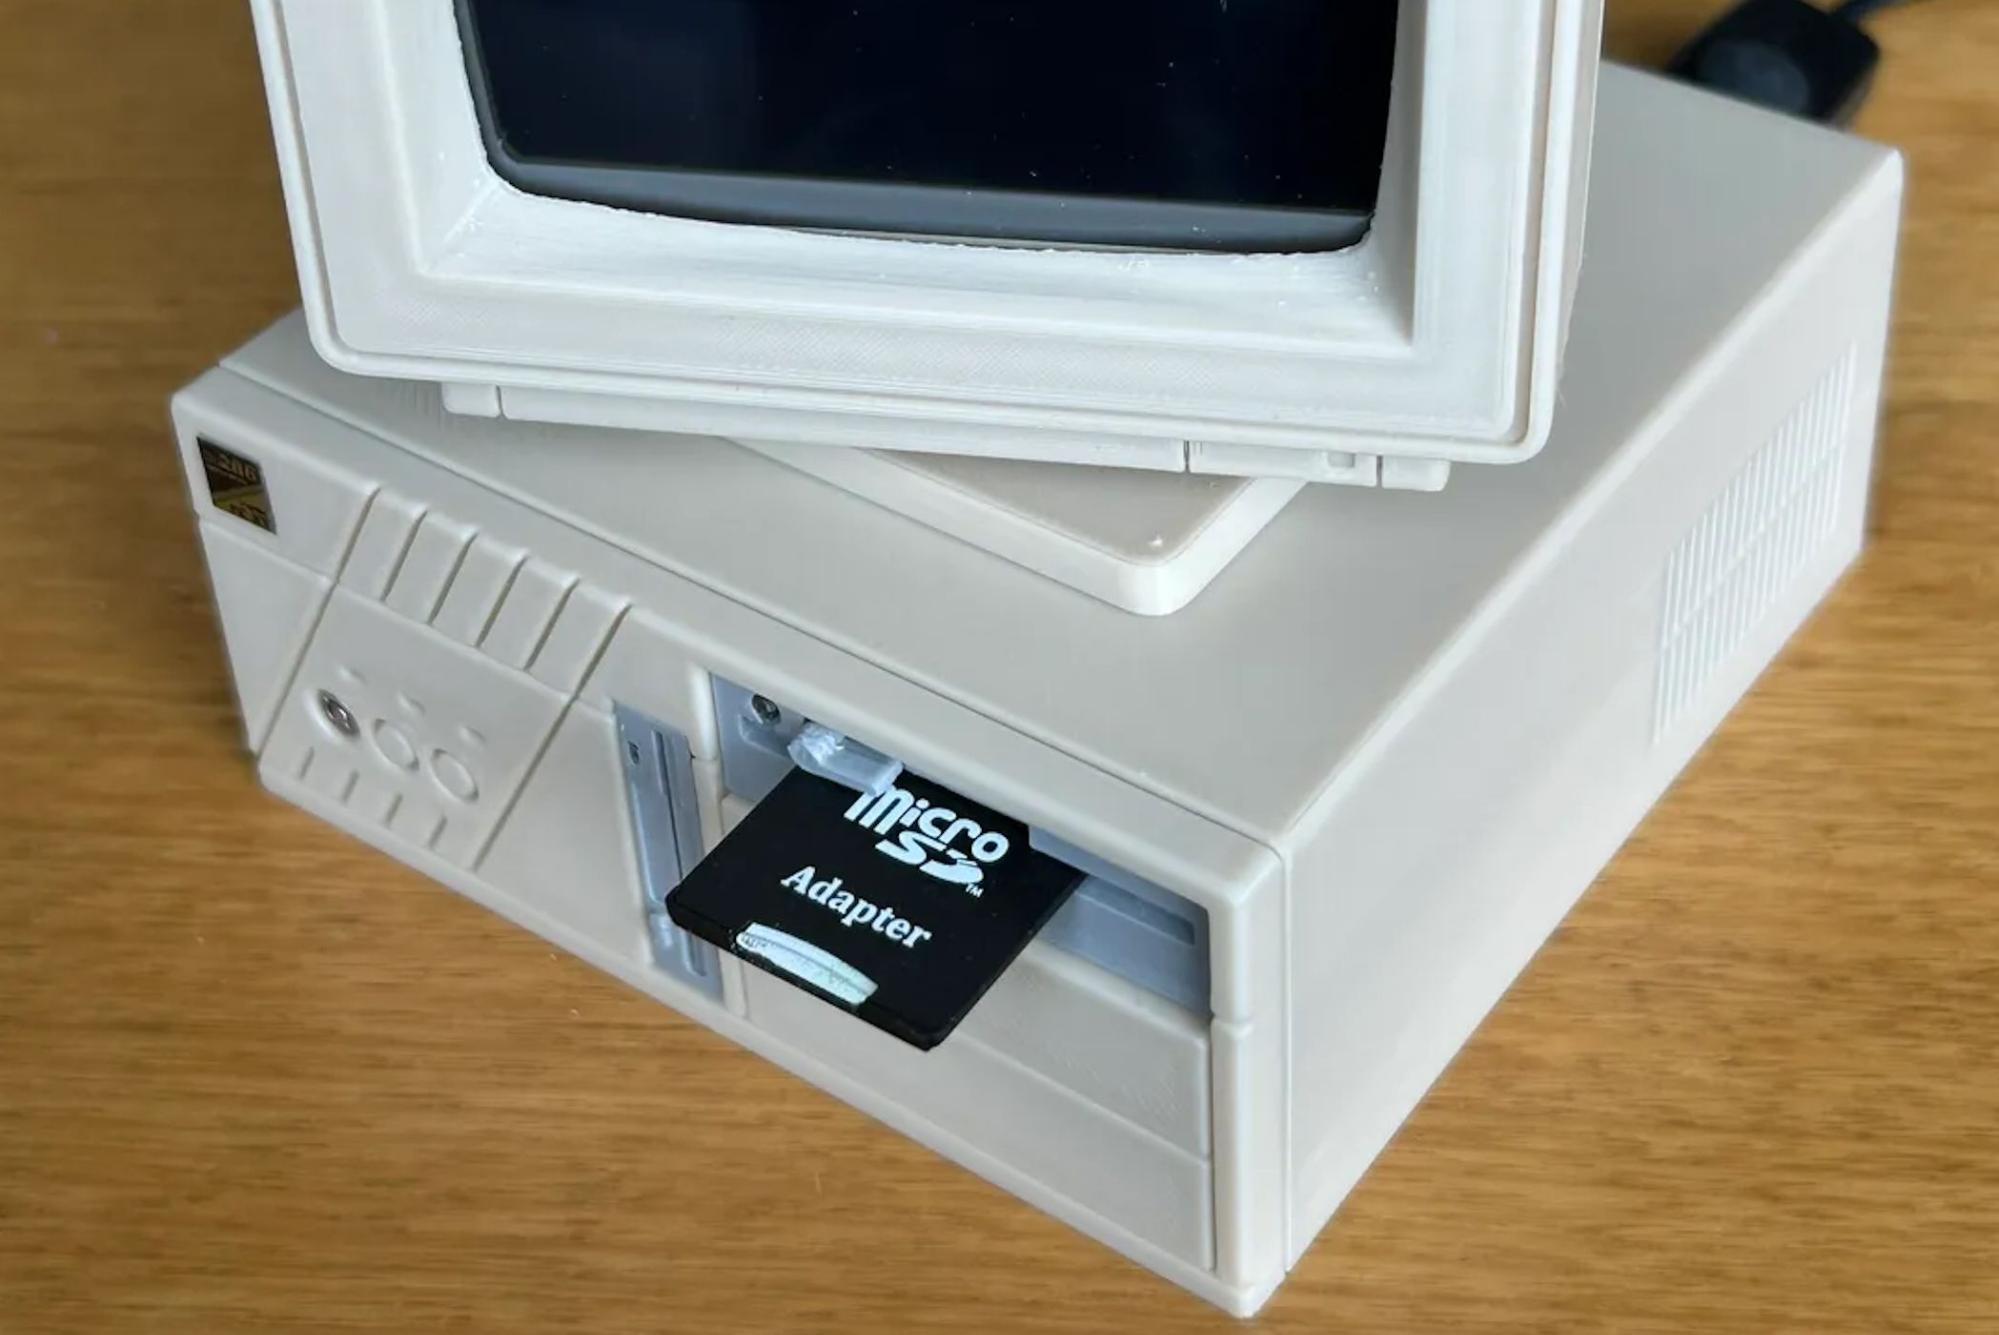 3D Printed Kit Turns Raspberry Pi into a Retro PC